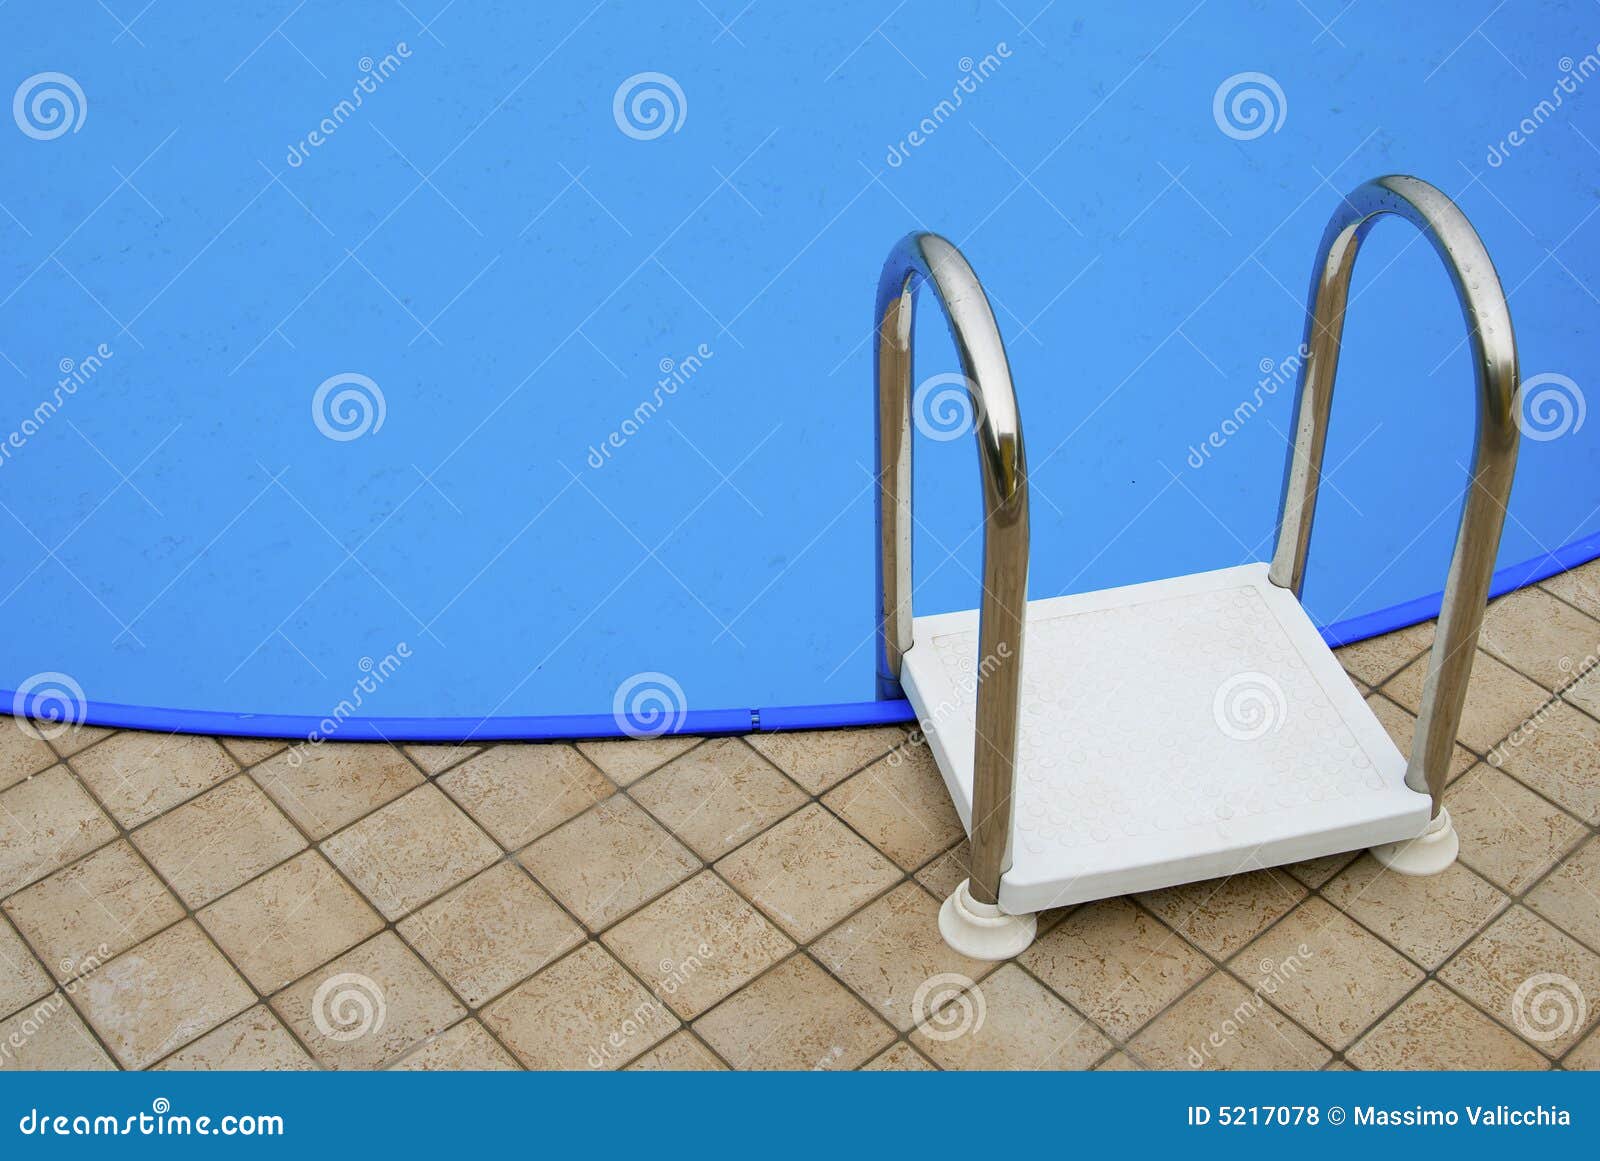 ladder and blu swimming pool